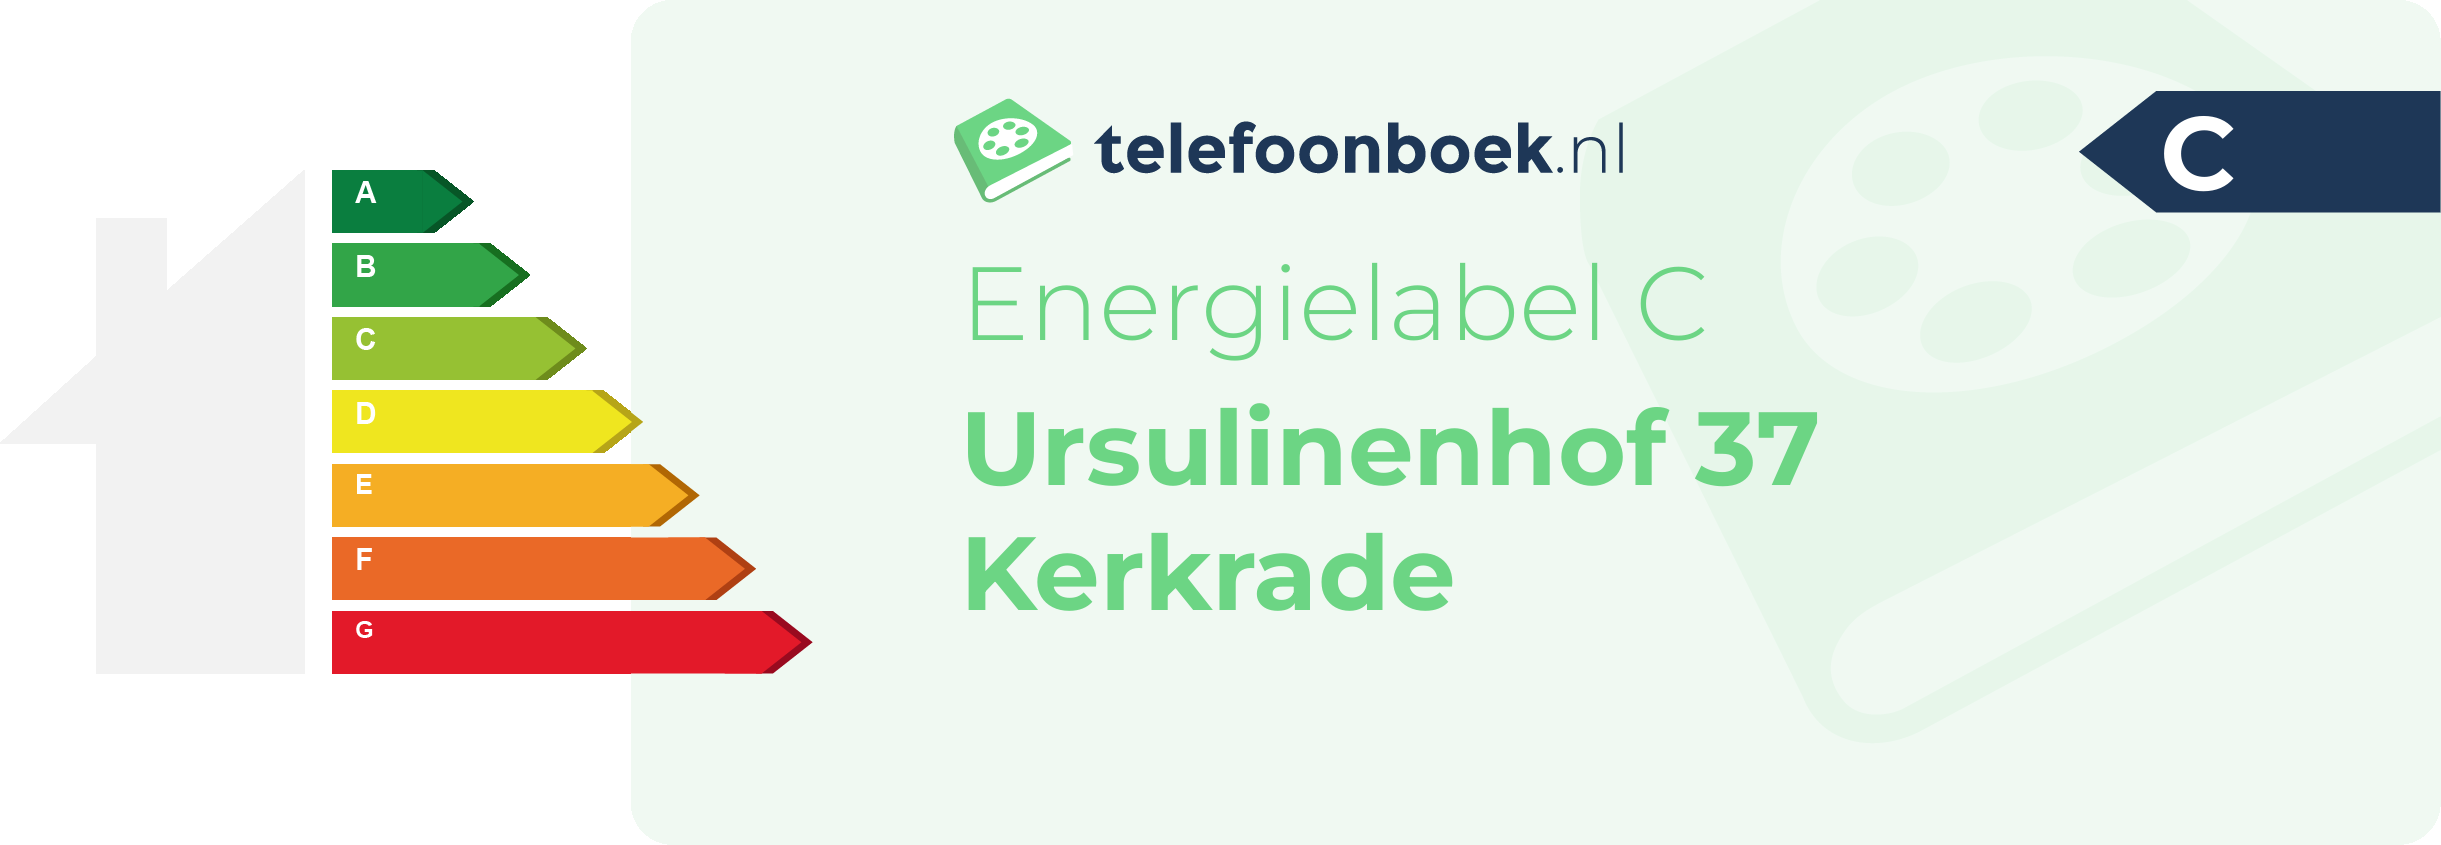 Energielabel Ursulinenhof 37 Kerkrade